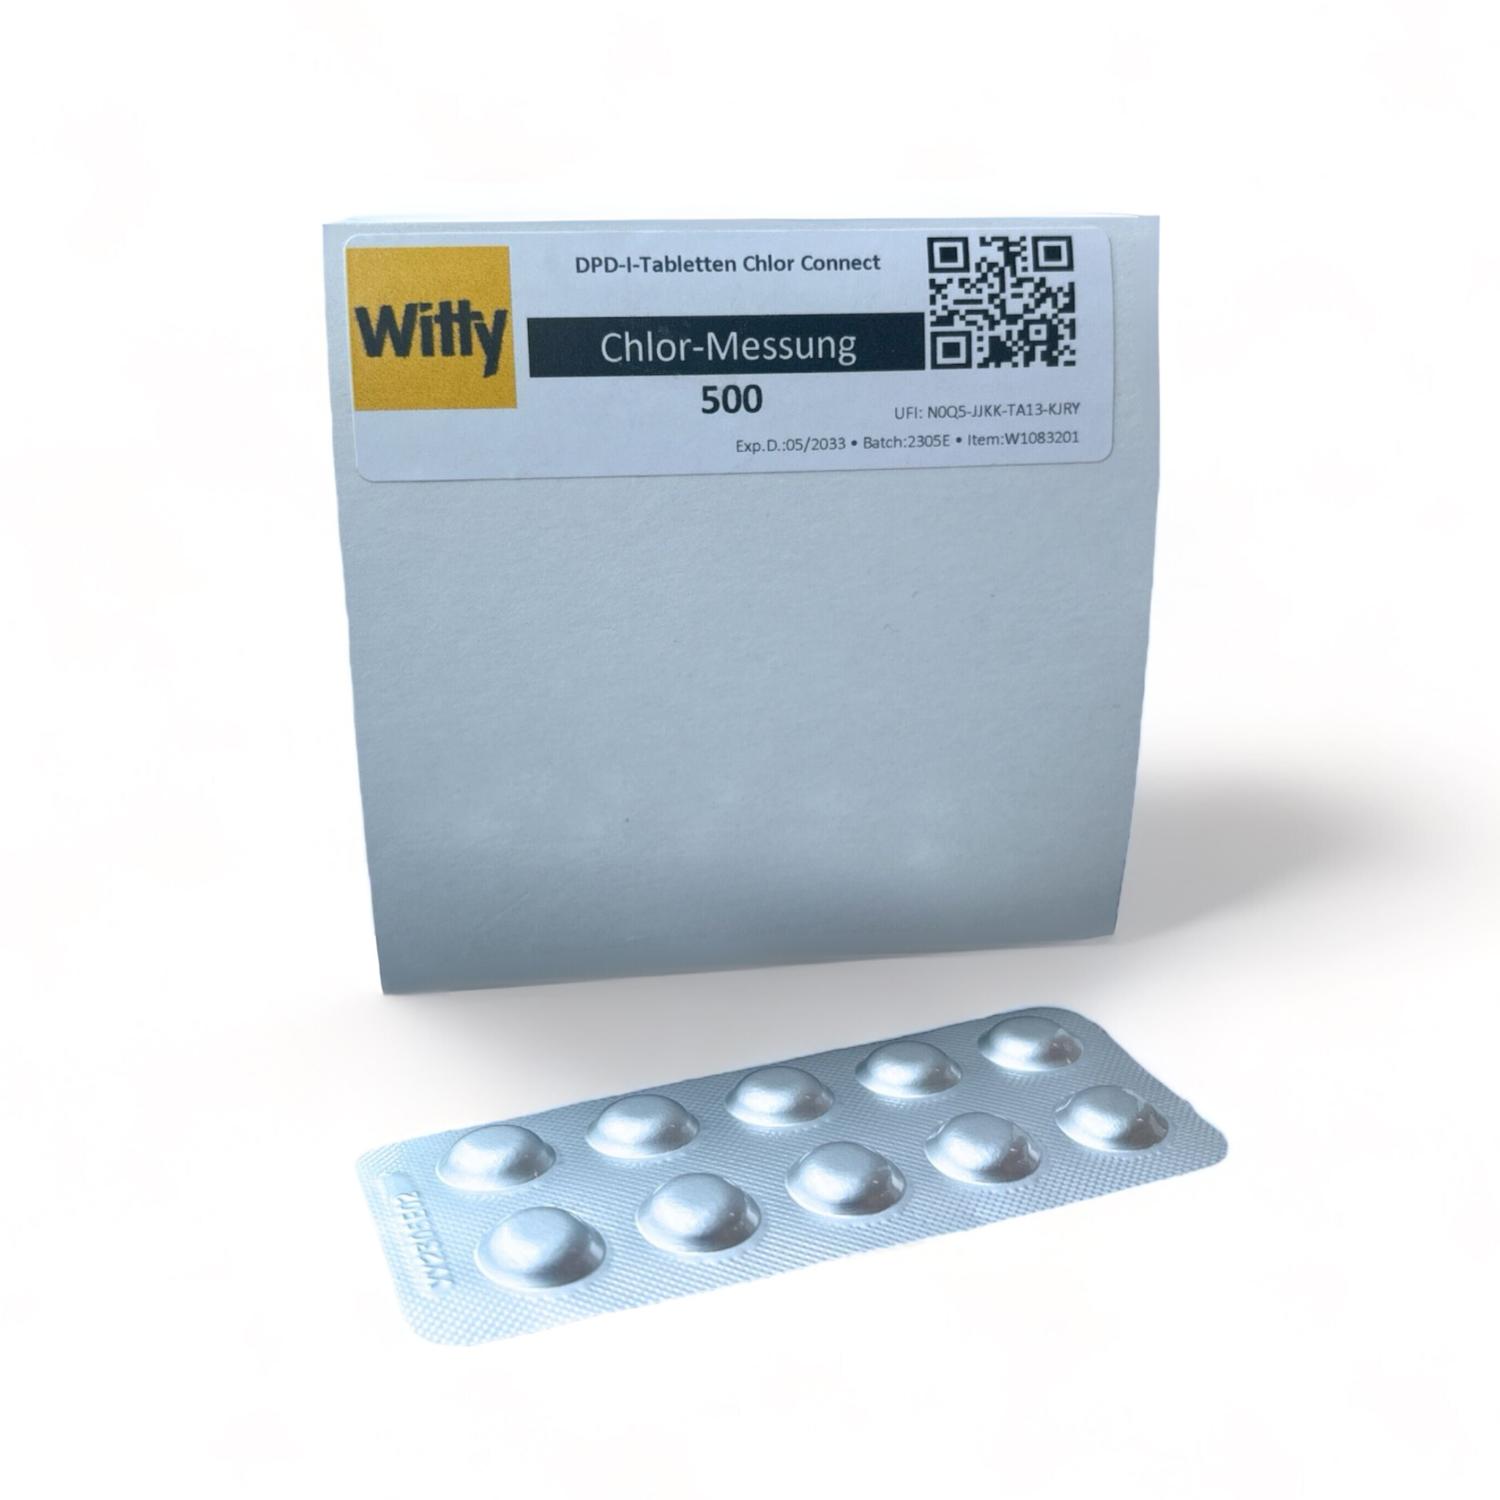 DPD-I-Tabletten Chlor Connect